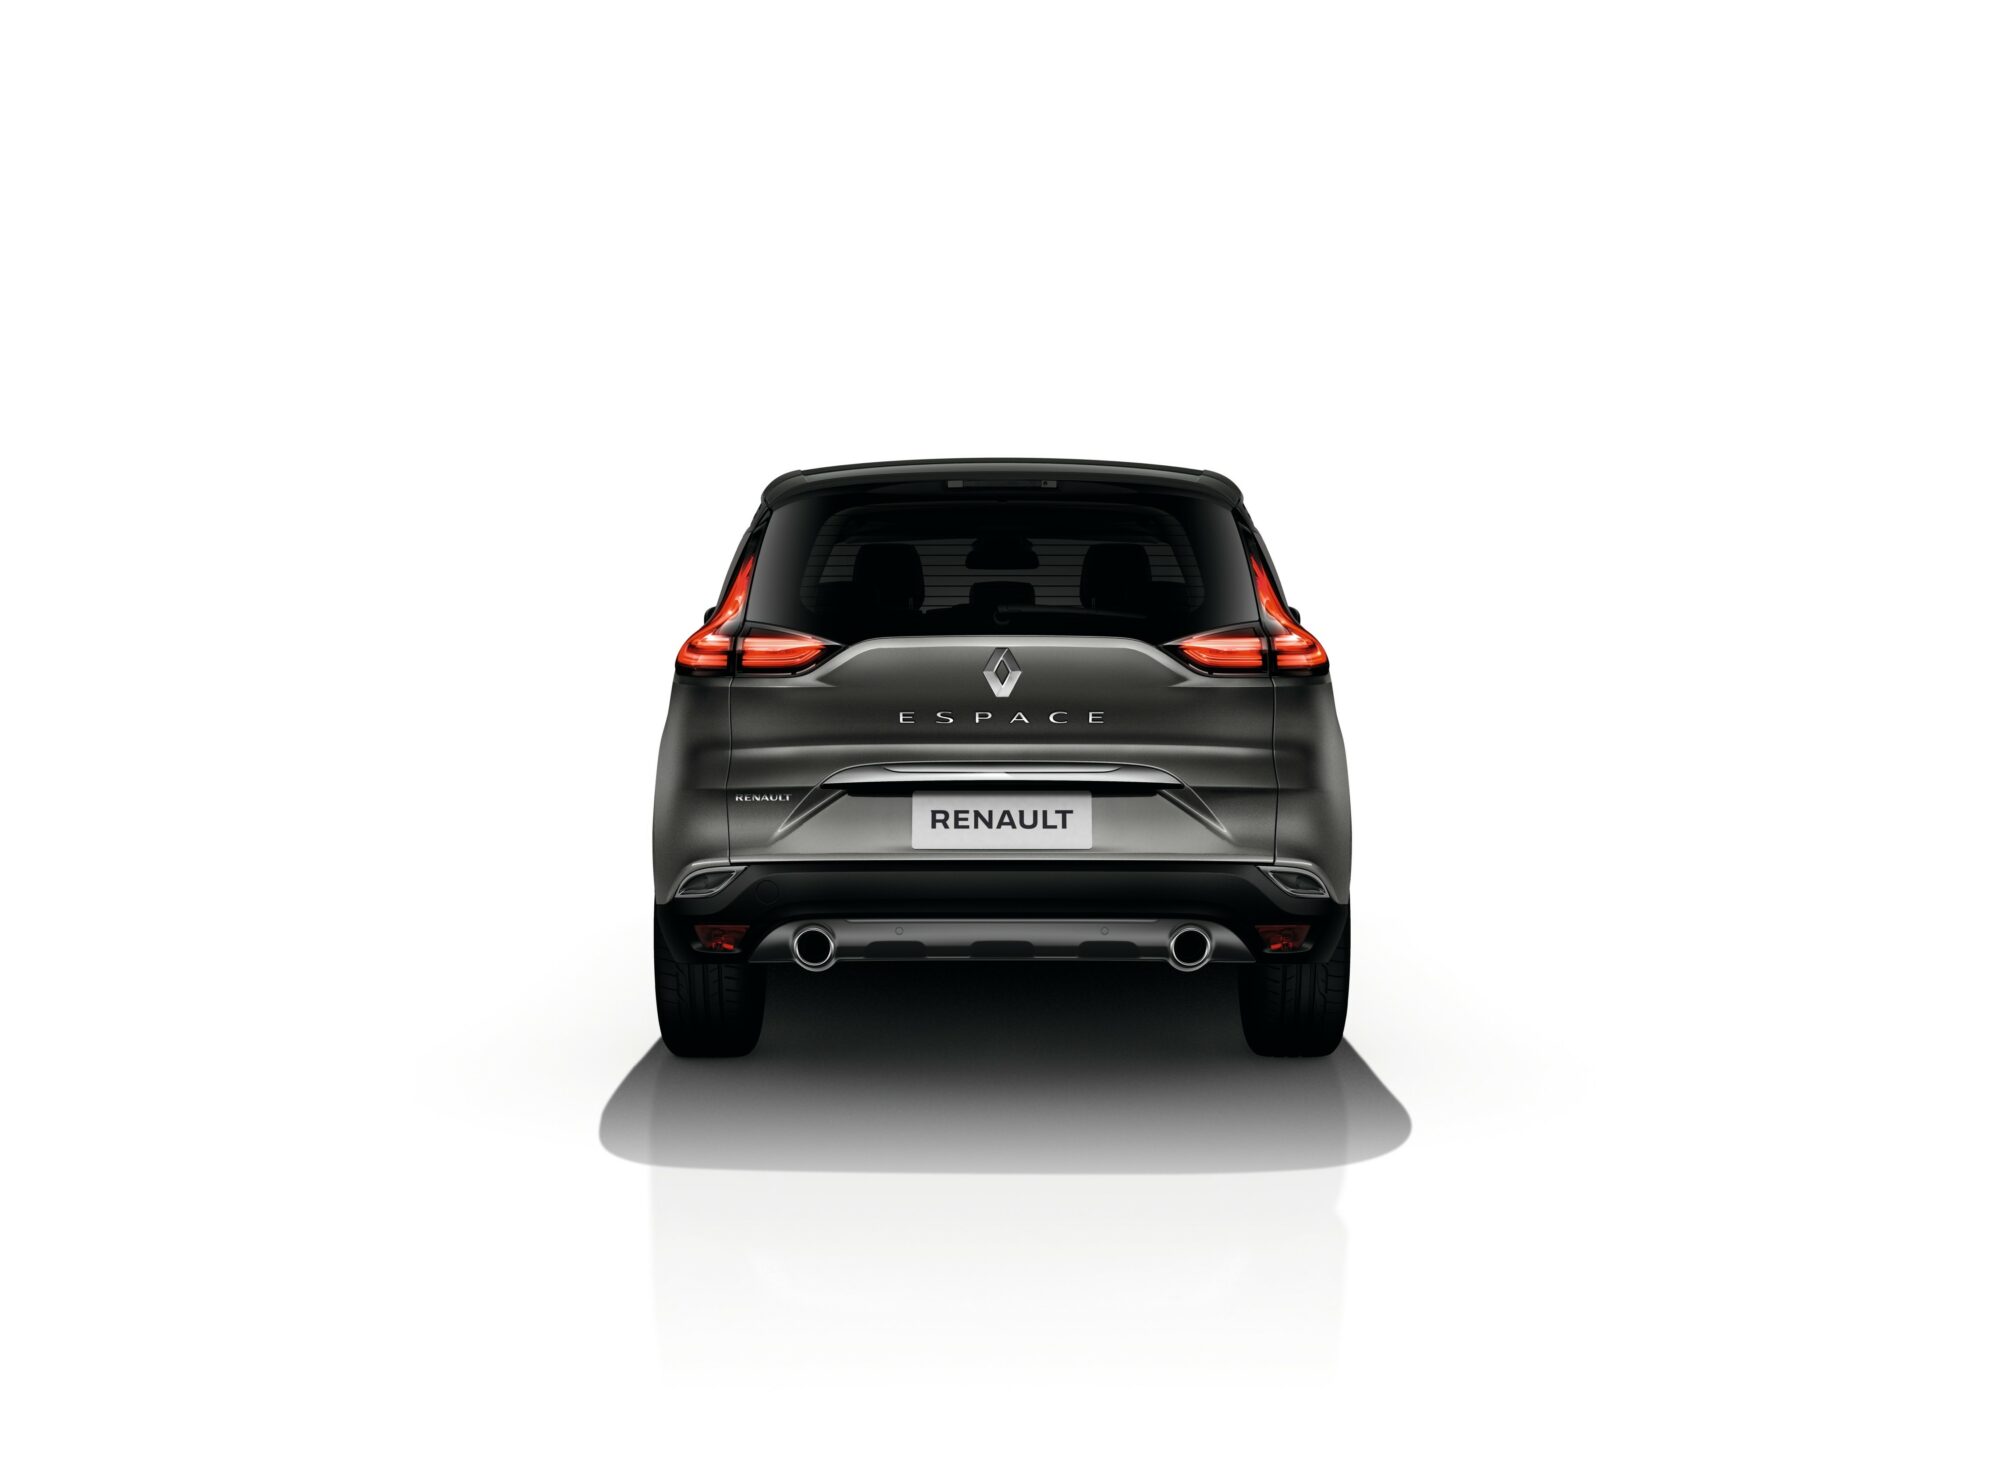 2017 - New Renault ESPACE China version